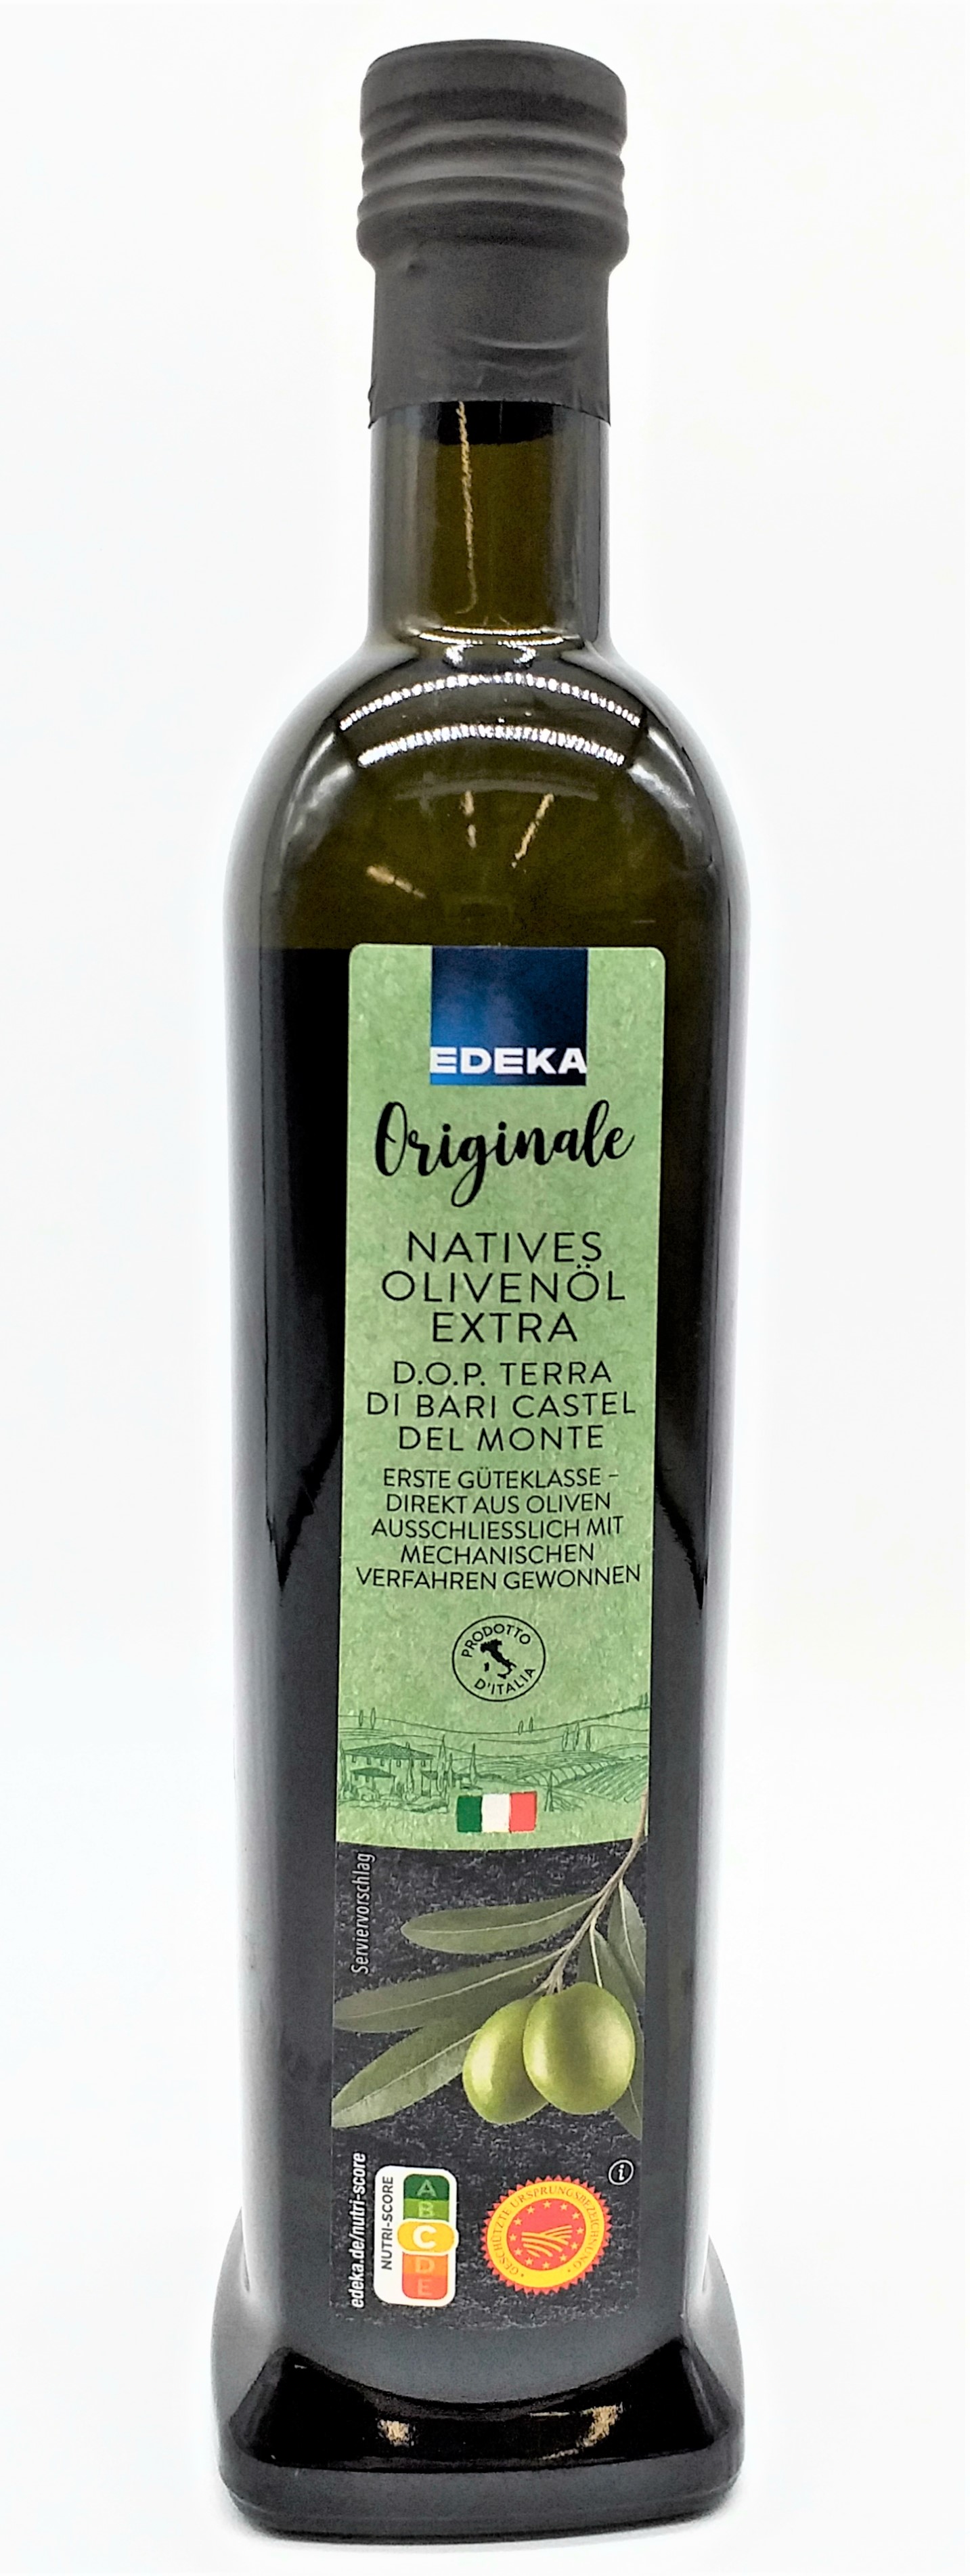 EDEKA Originale natives Olivenöl extra, aus Italien  500ml